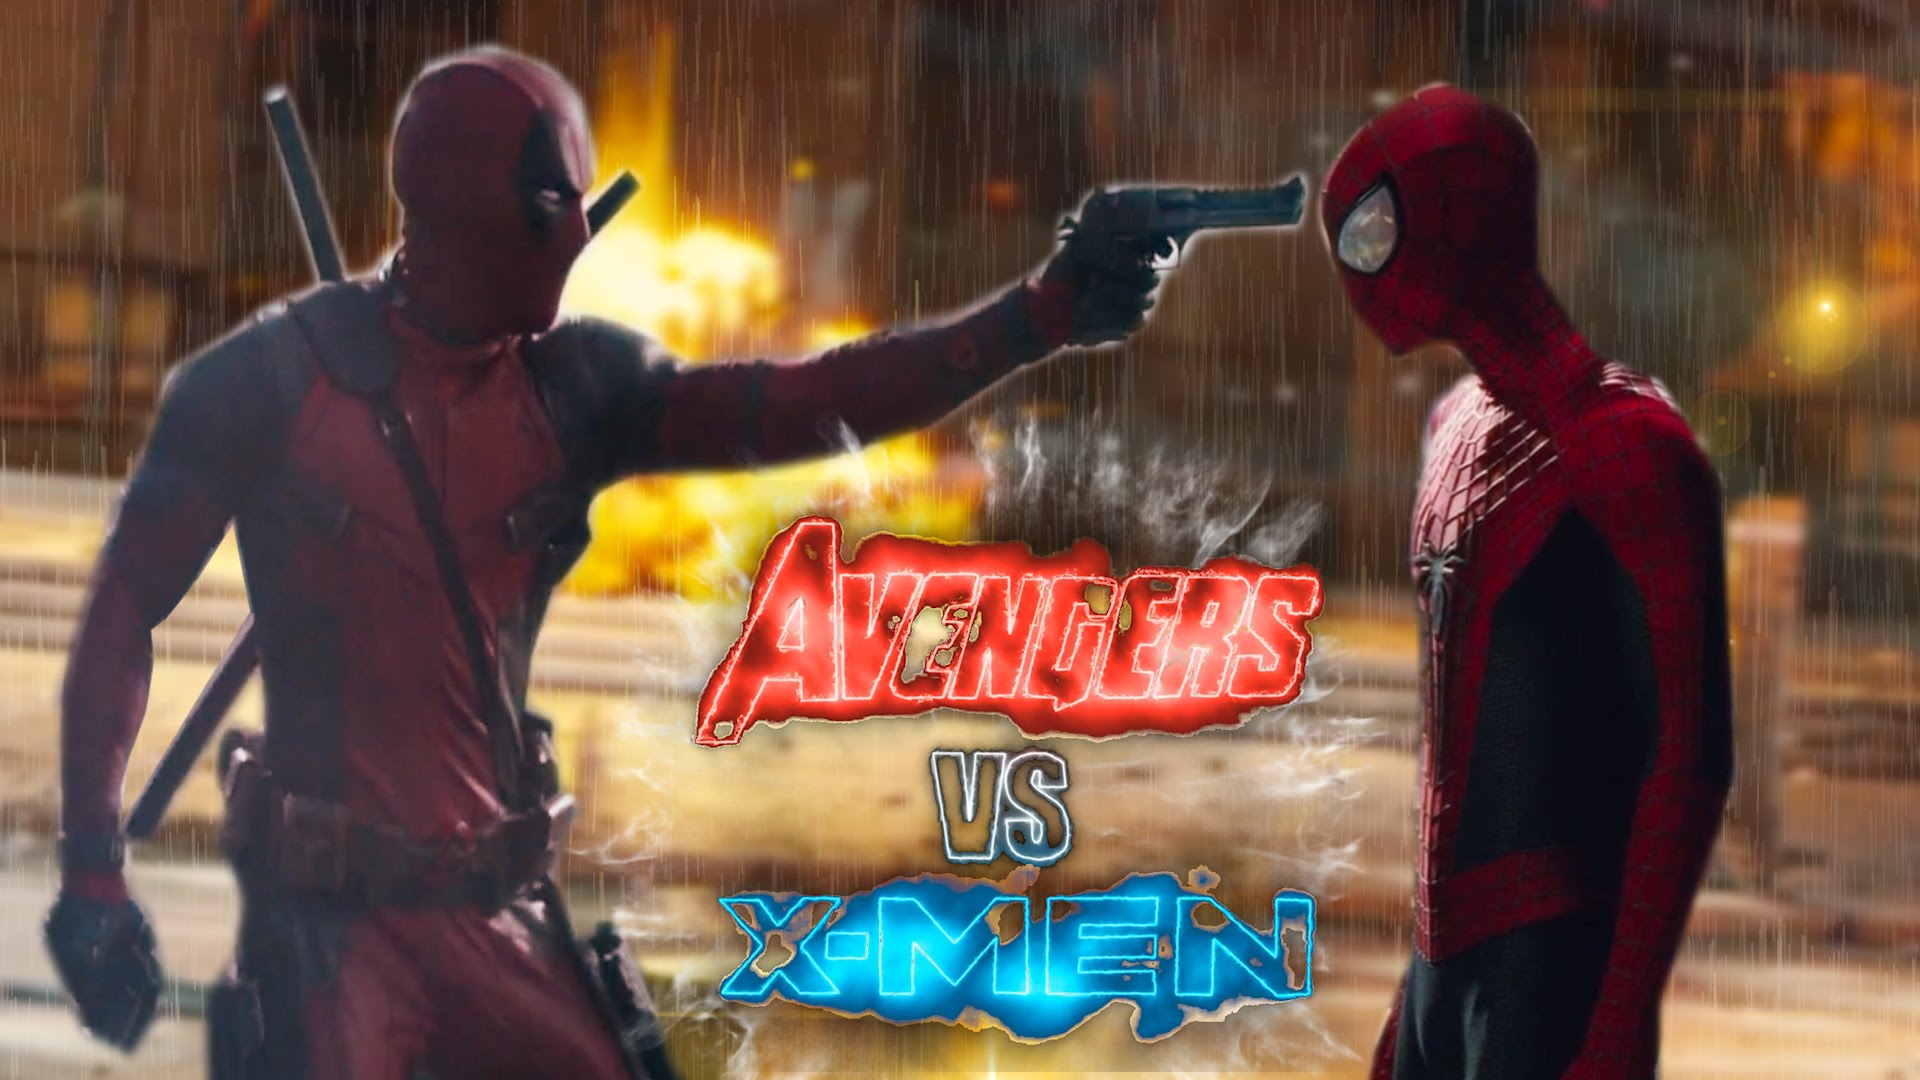 Avengers vs X-Men Supercut!